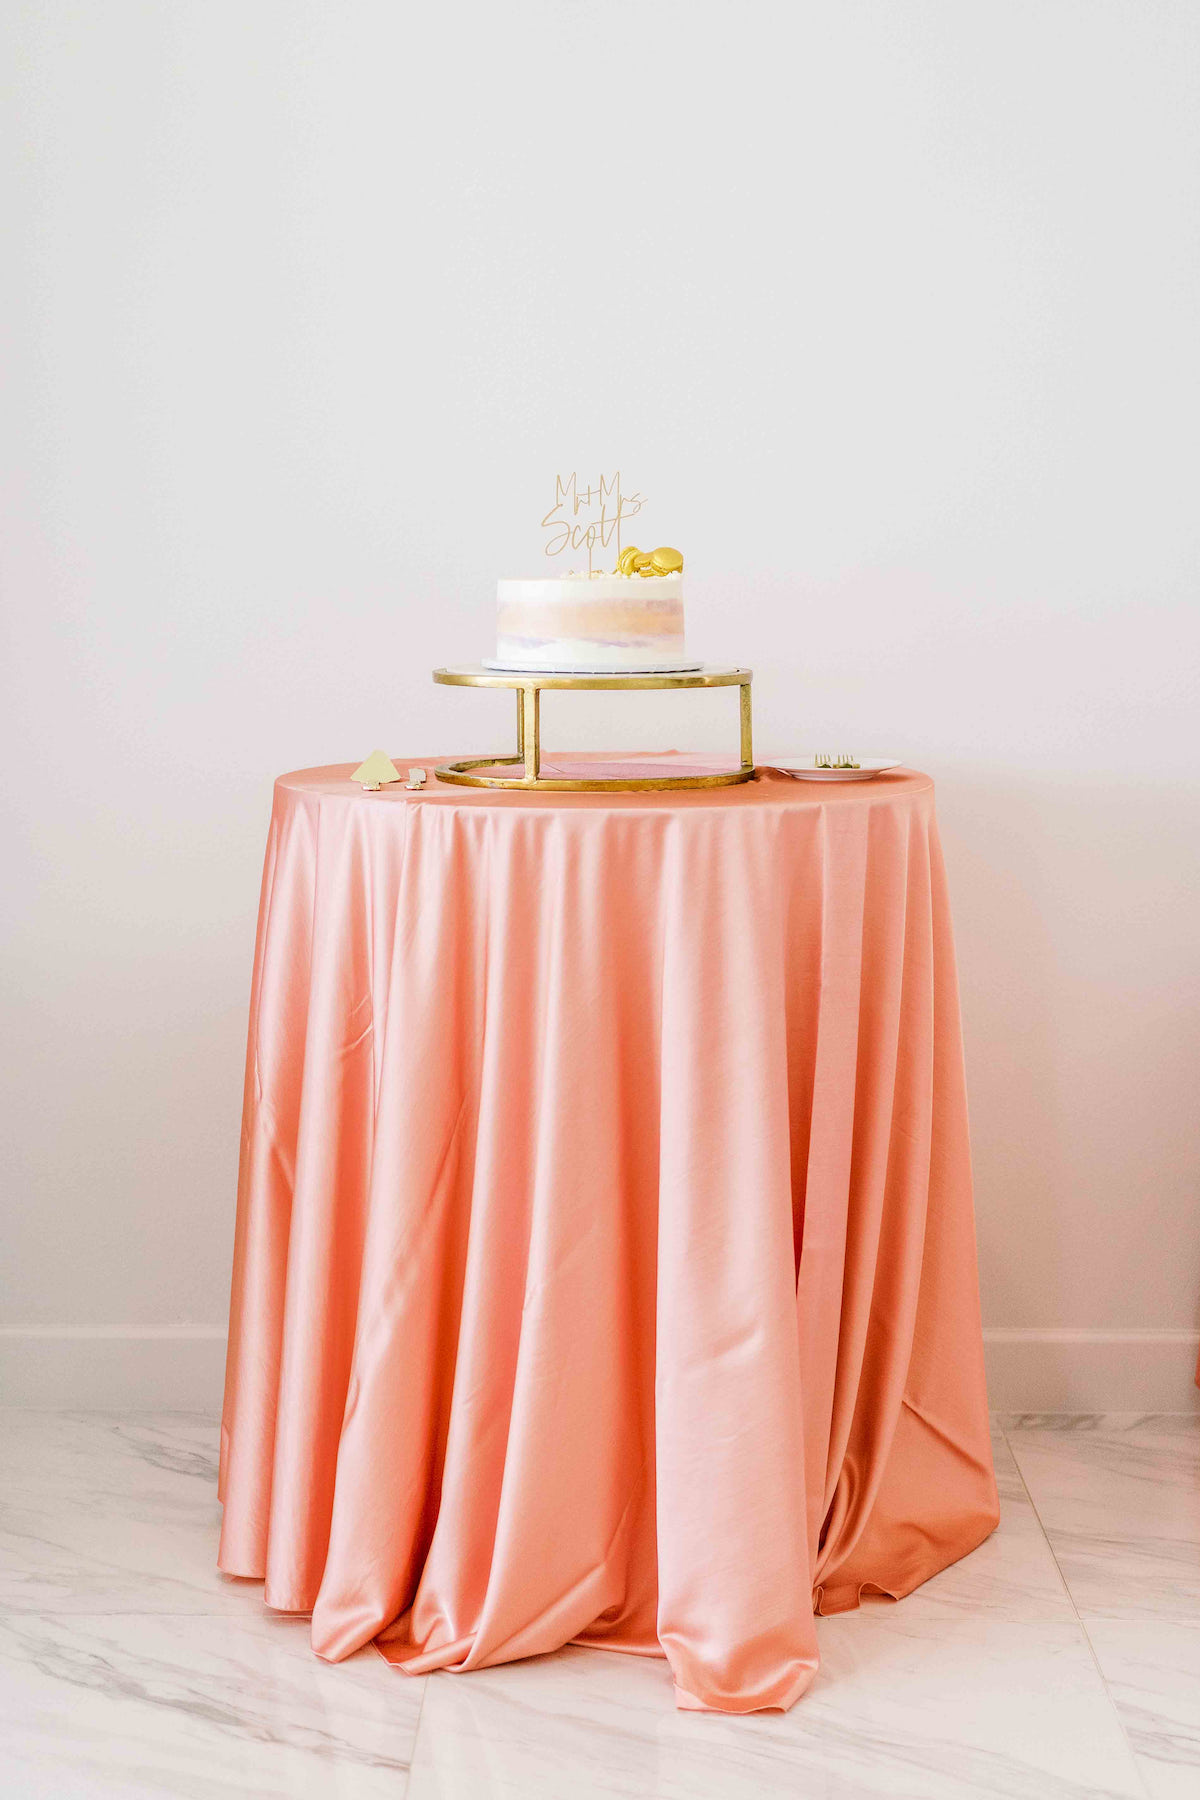 1-tier wedding cake designs